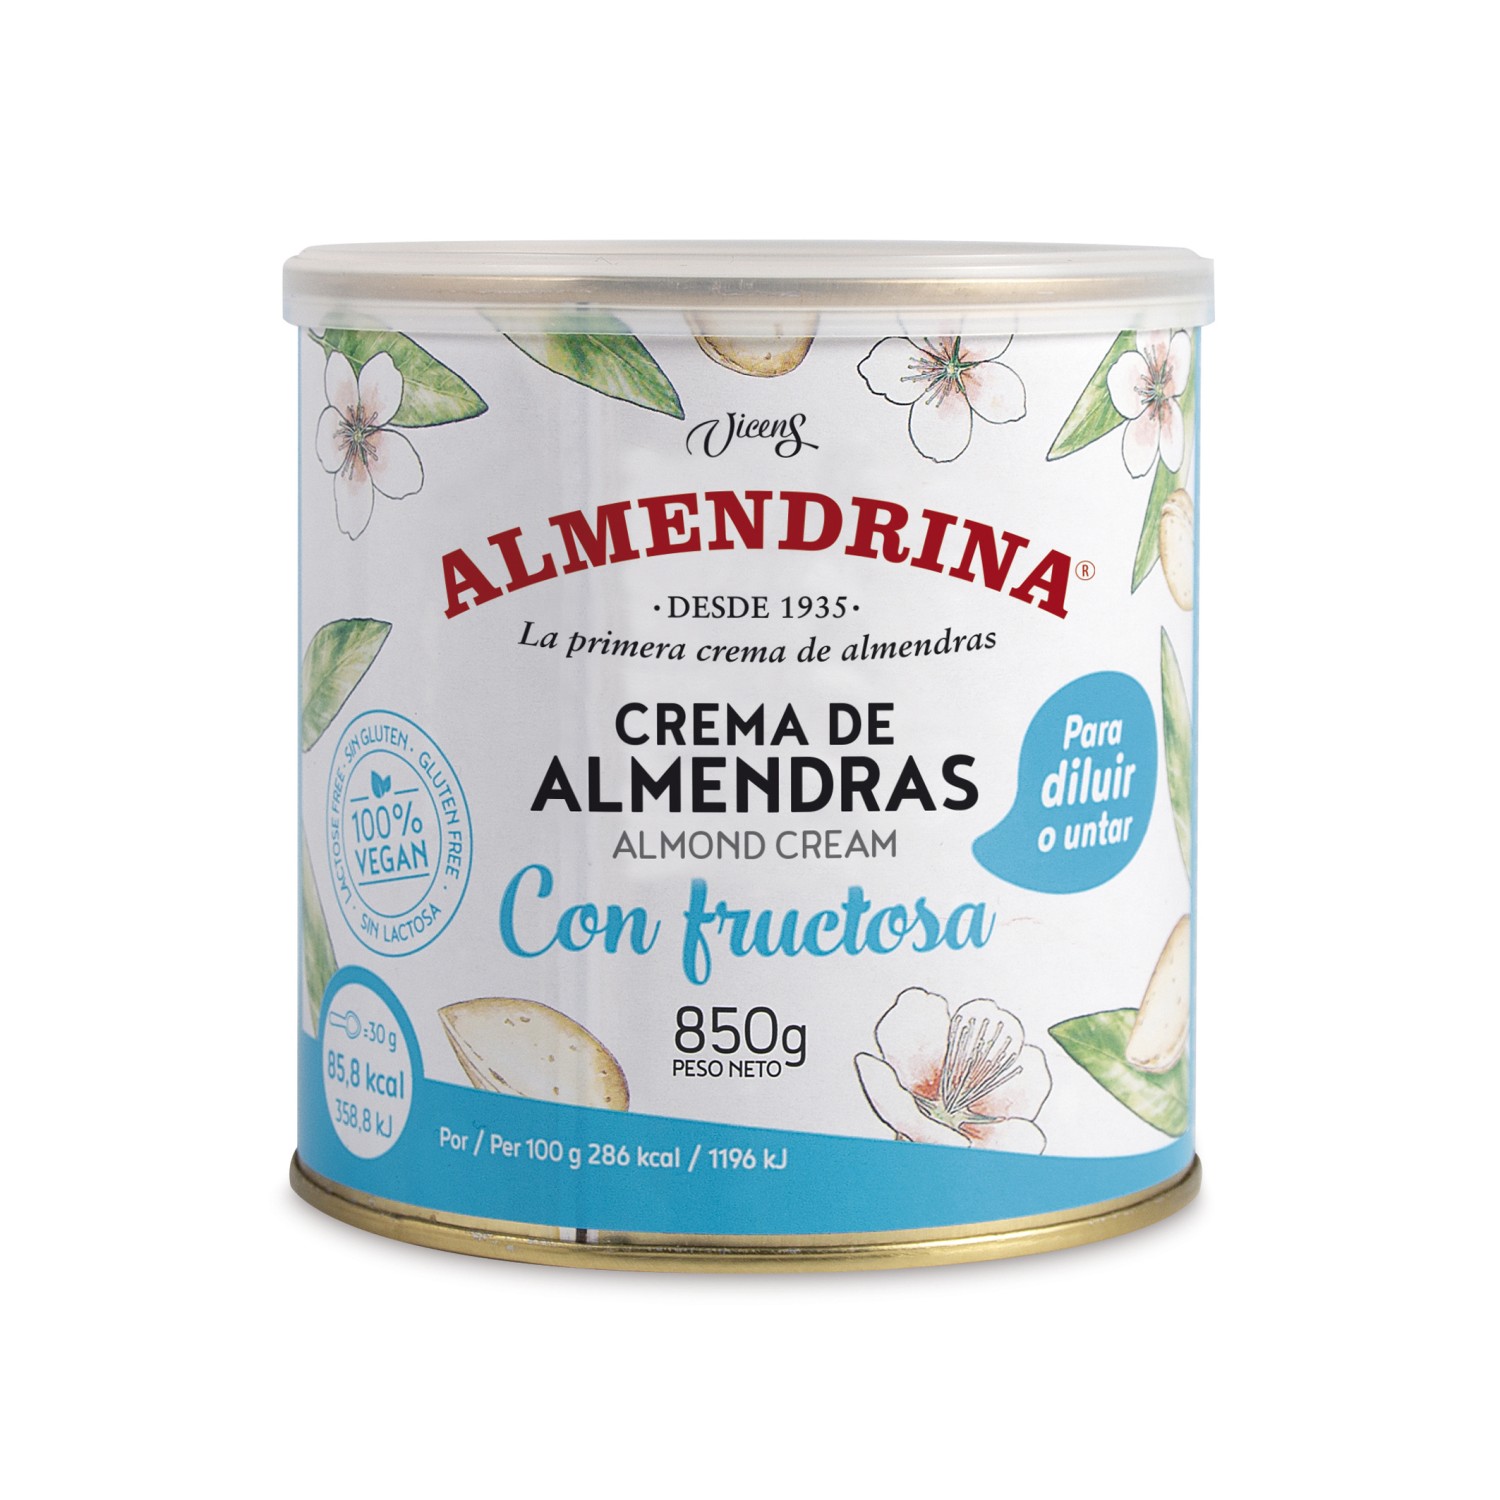 Almond Cream with Fructose Almendrina 850g